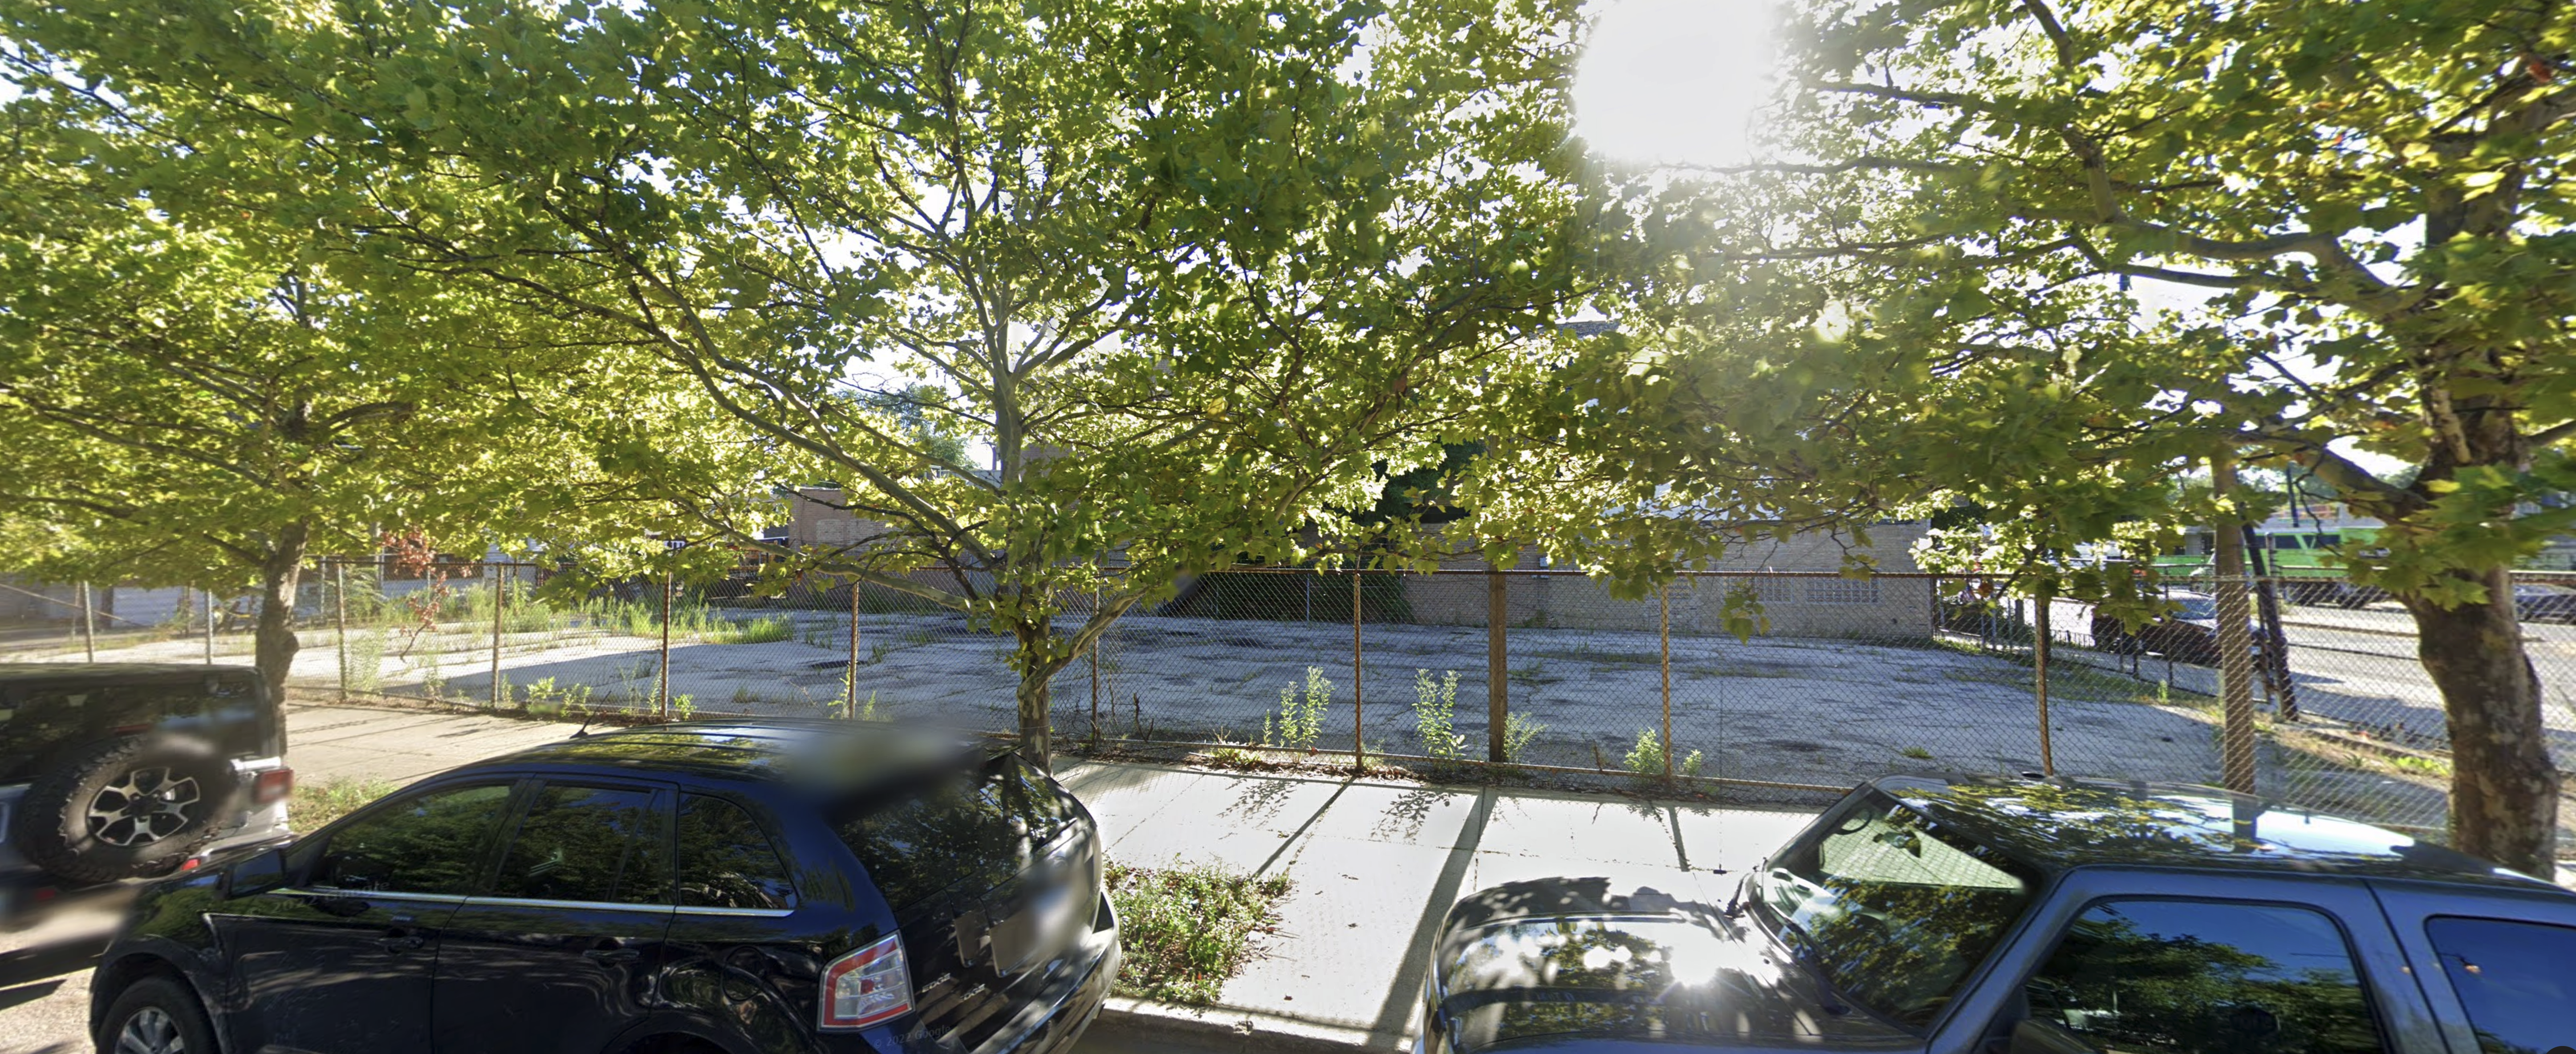 4007 N Kolmar Avenue via Google Maps